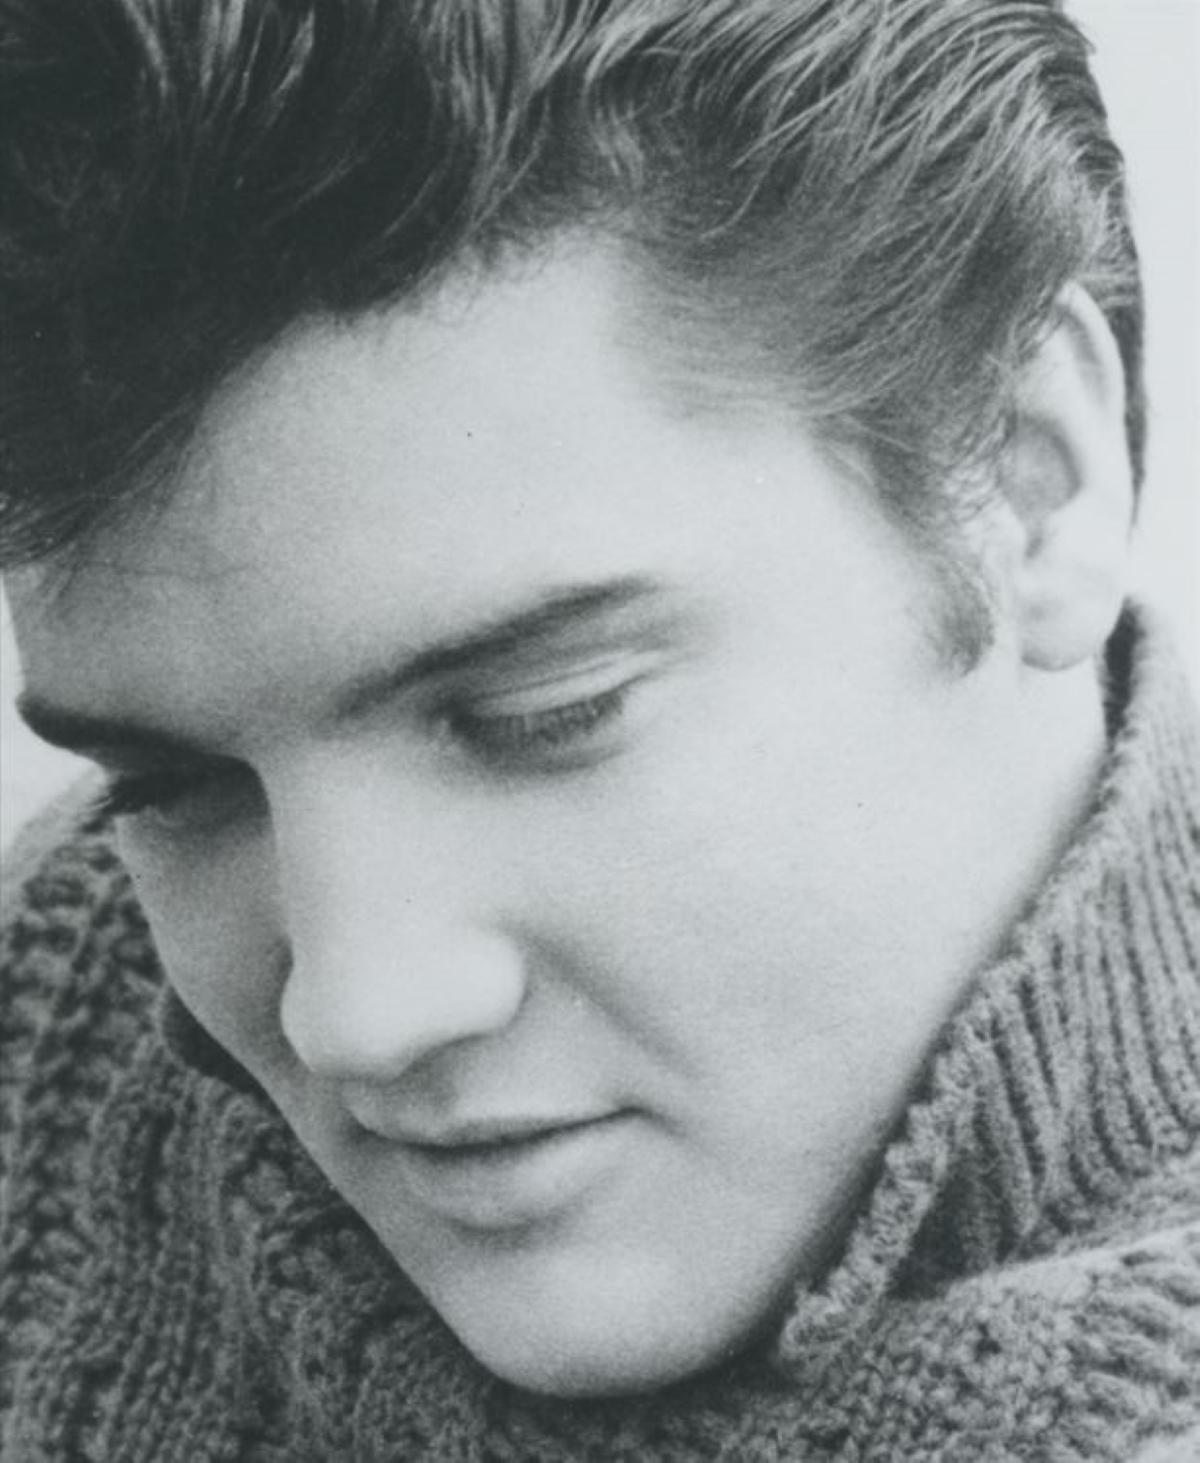 Elvis Presley, portrait - Photograph by Unknown